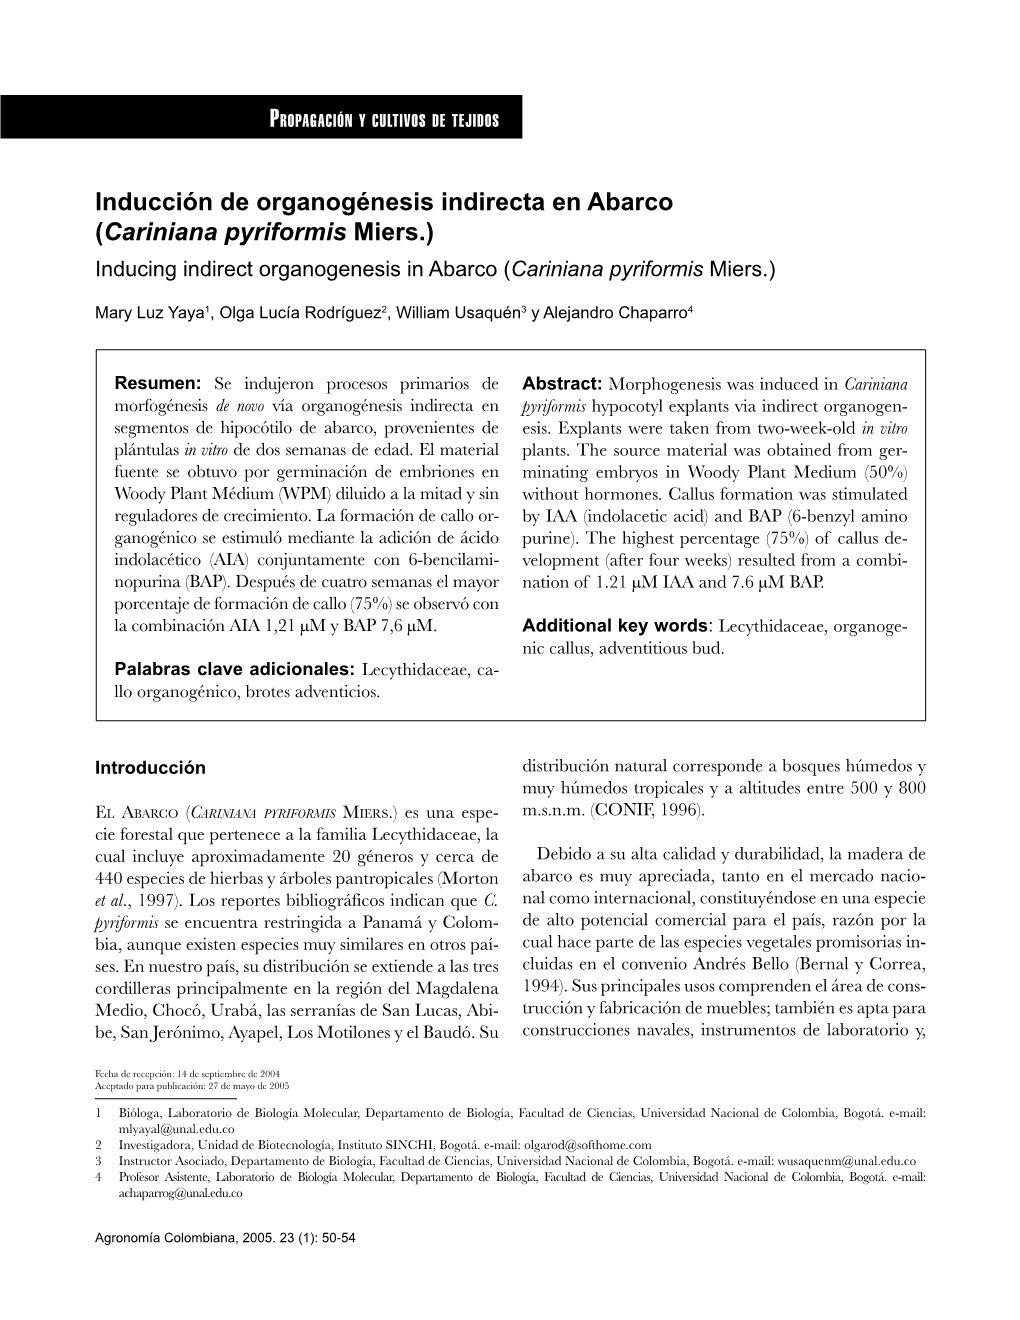 Cariniana Pyriformis Miers.) Inducing Indirect Organogenesis in Abarco (Cariniana Pyriformis Miers.)